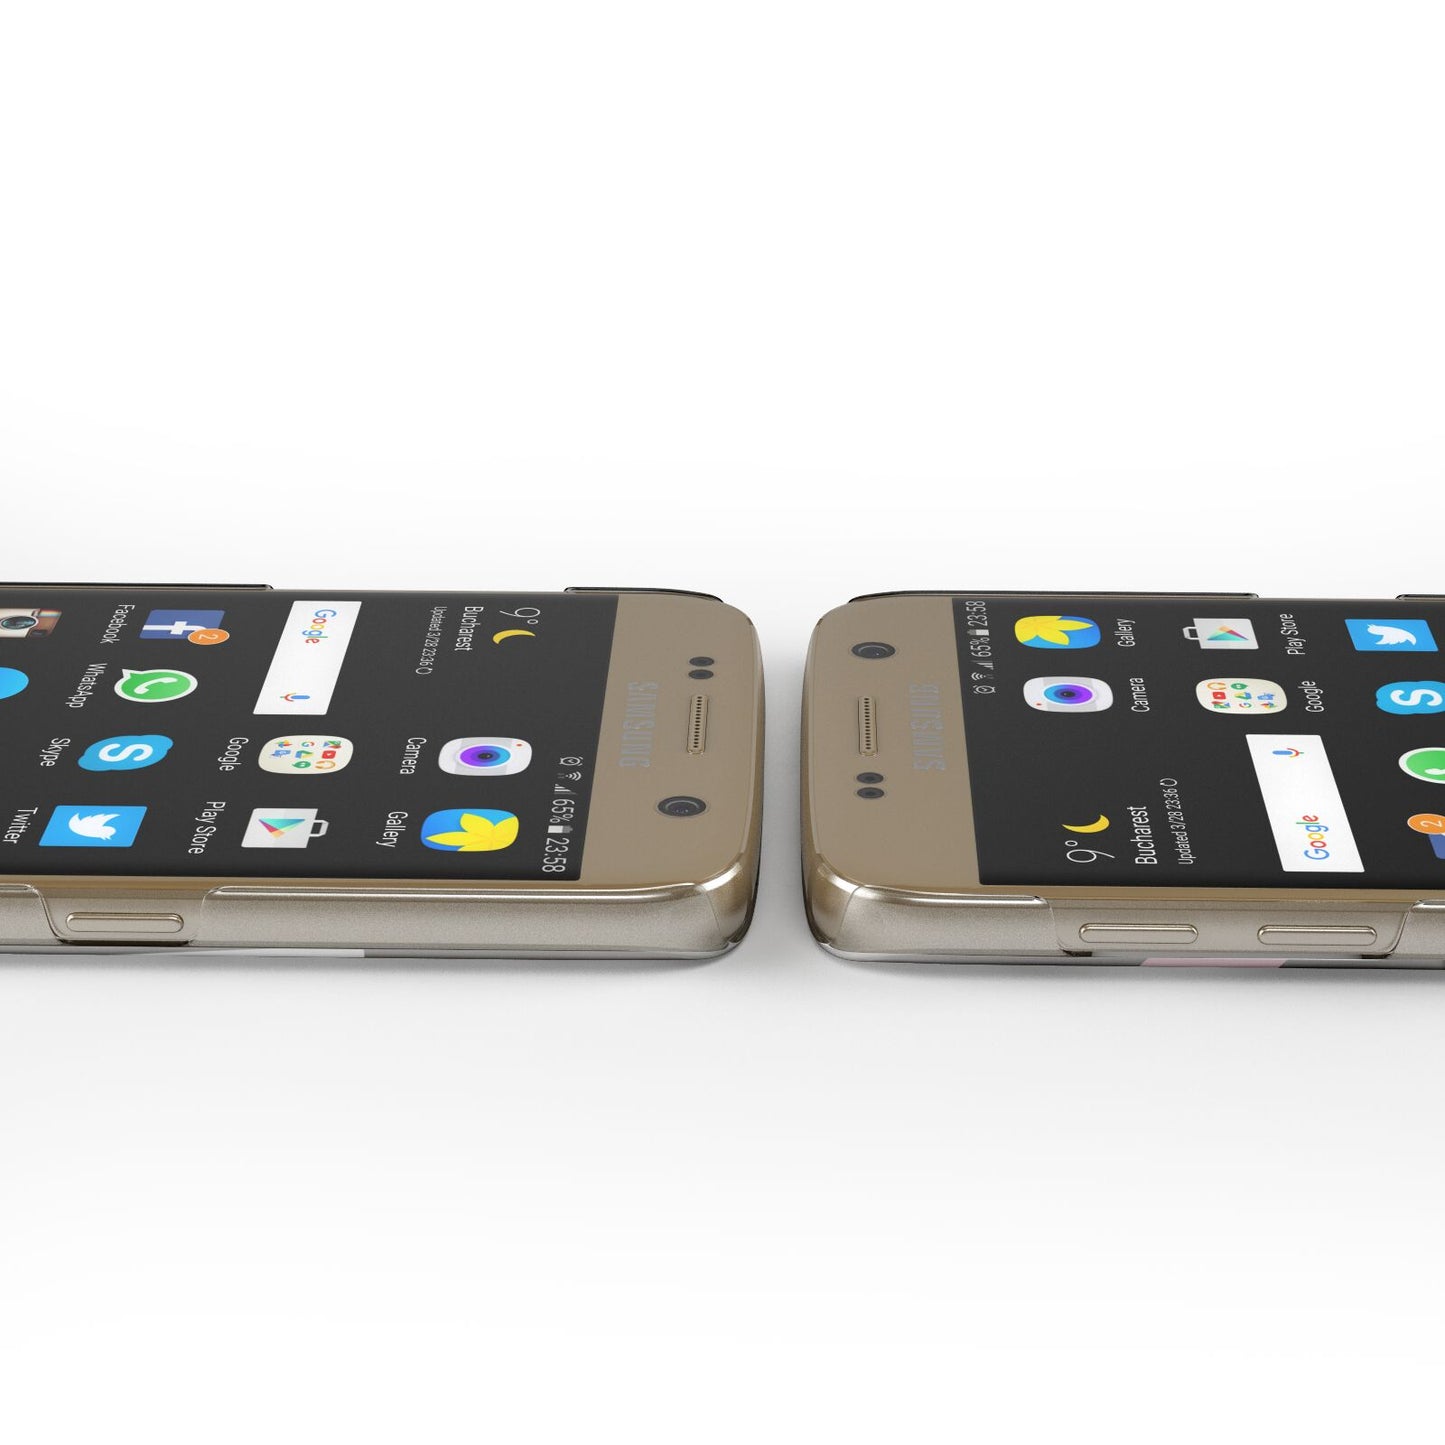 Photo Frame Samsung Galaxy Case Ports Cutout